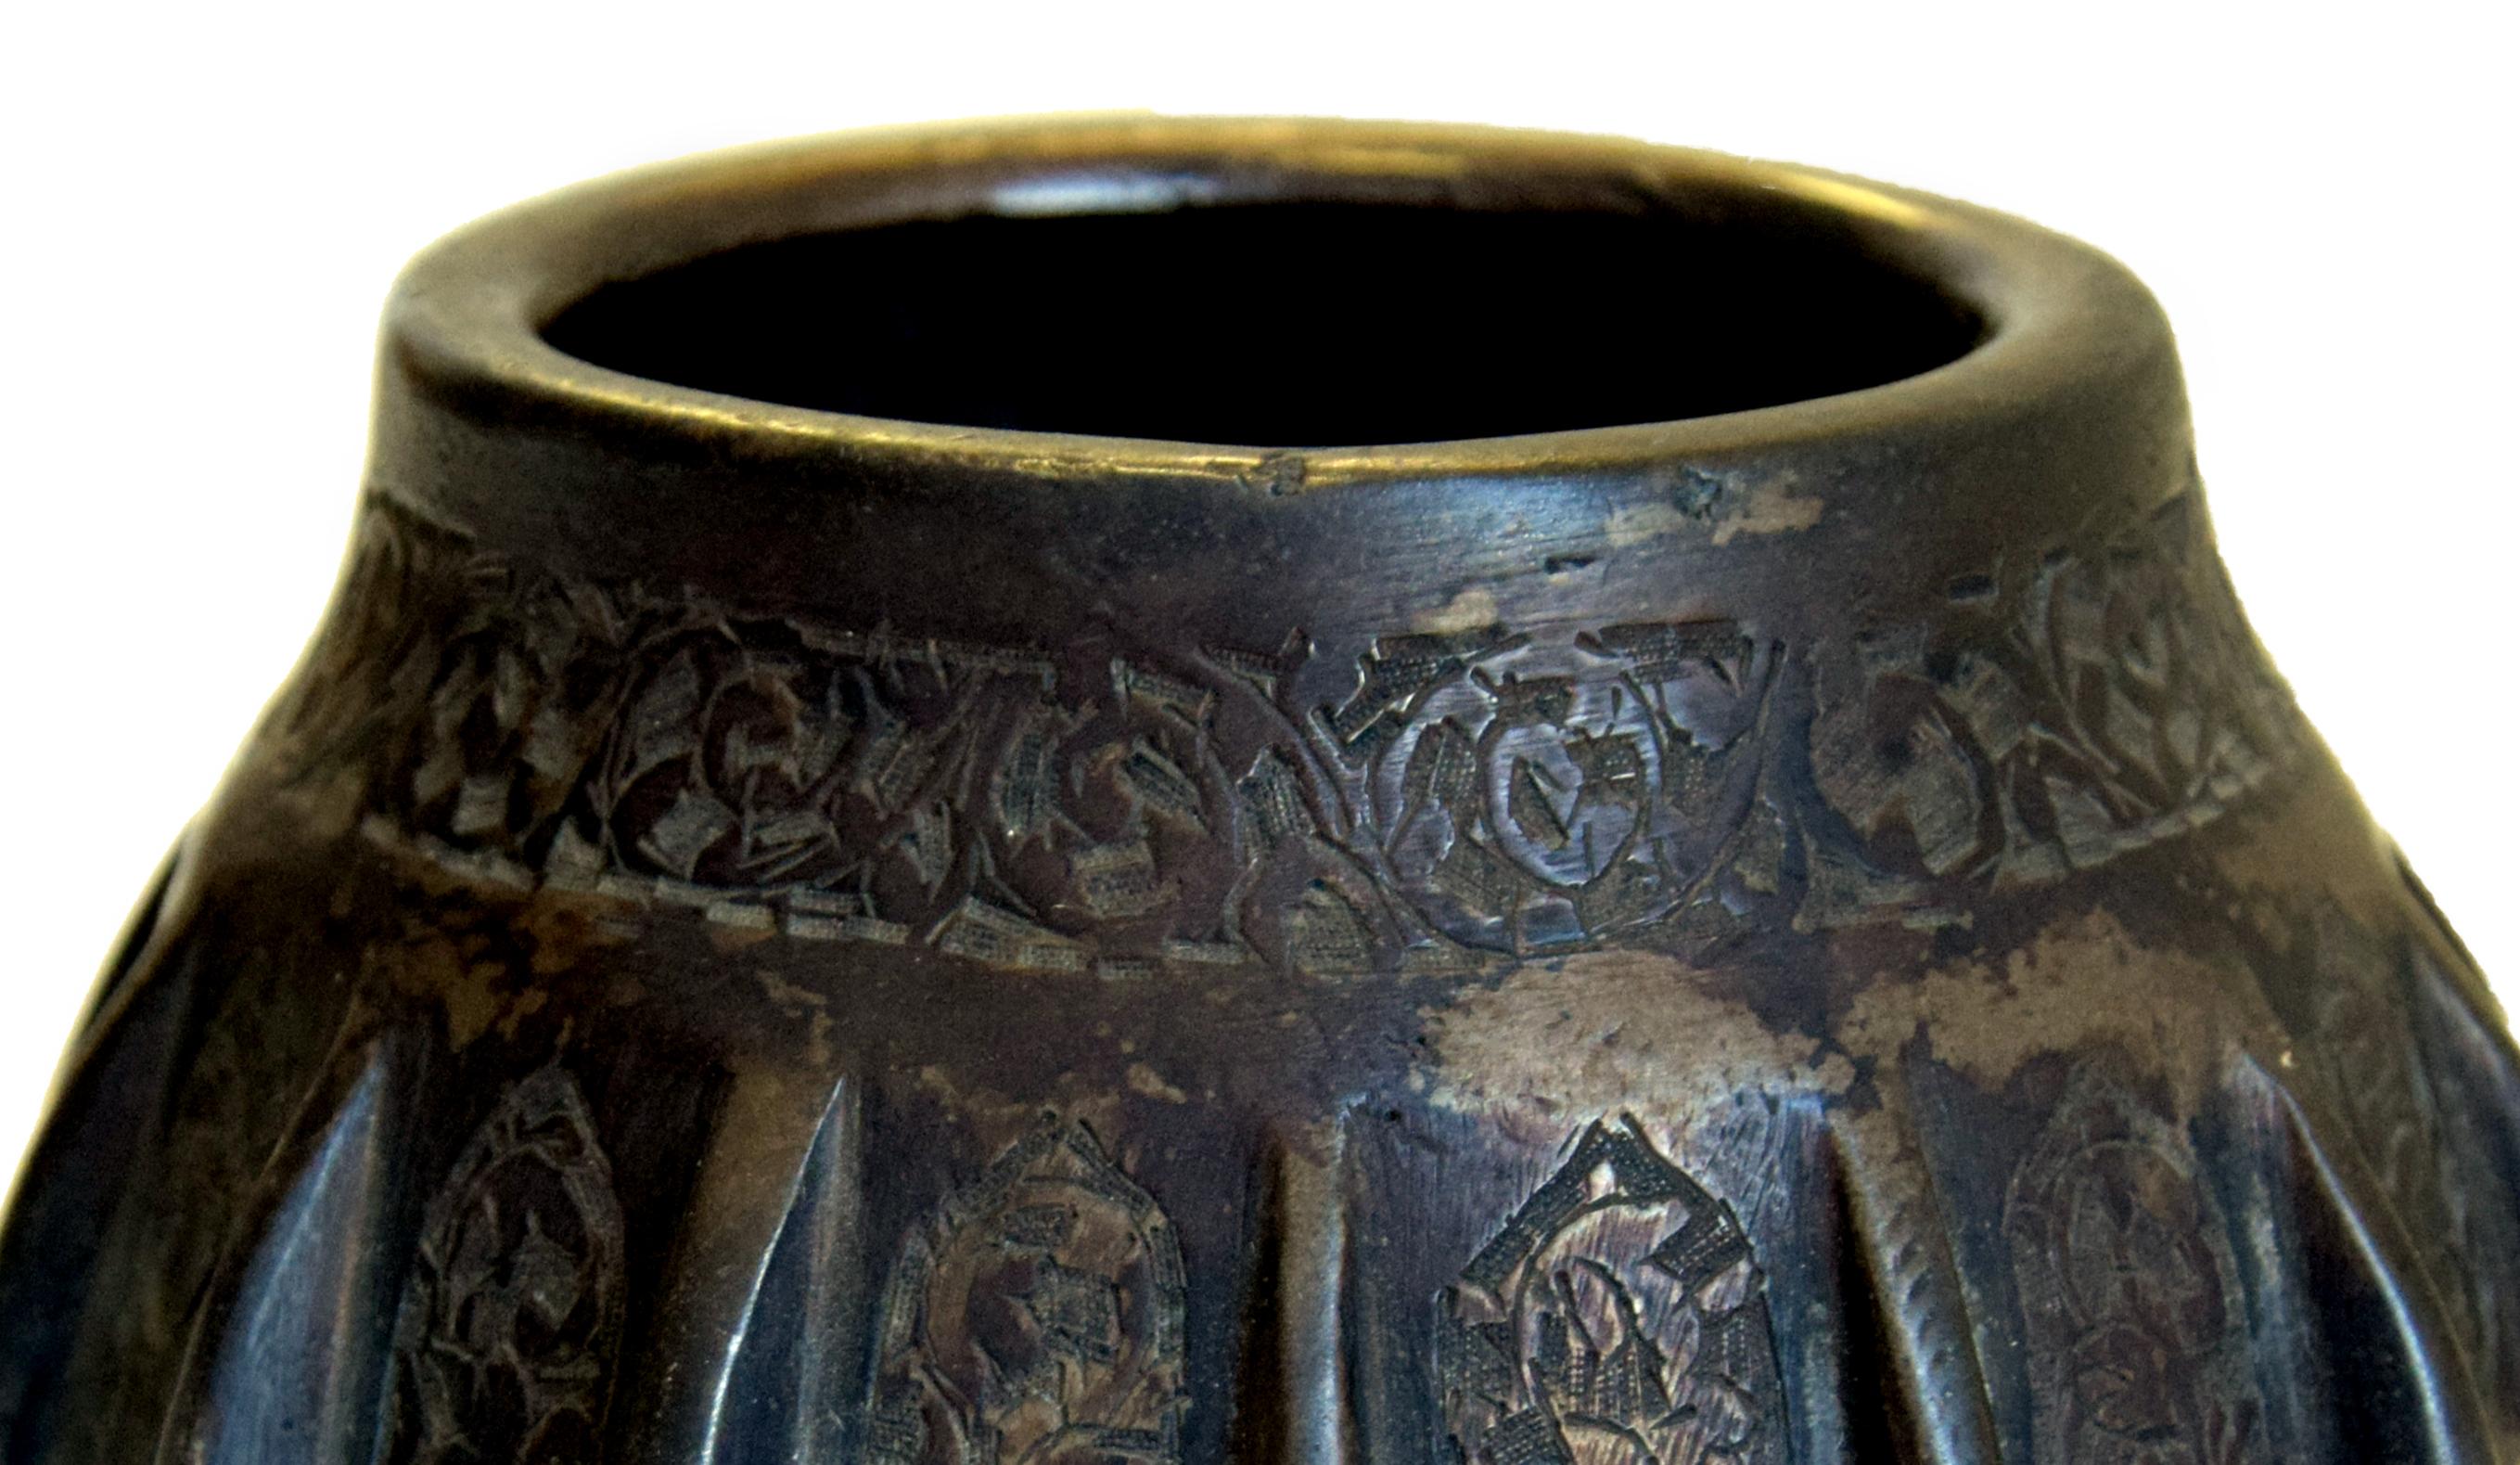 antique bronze bowl